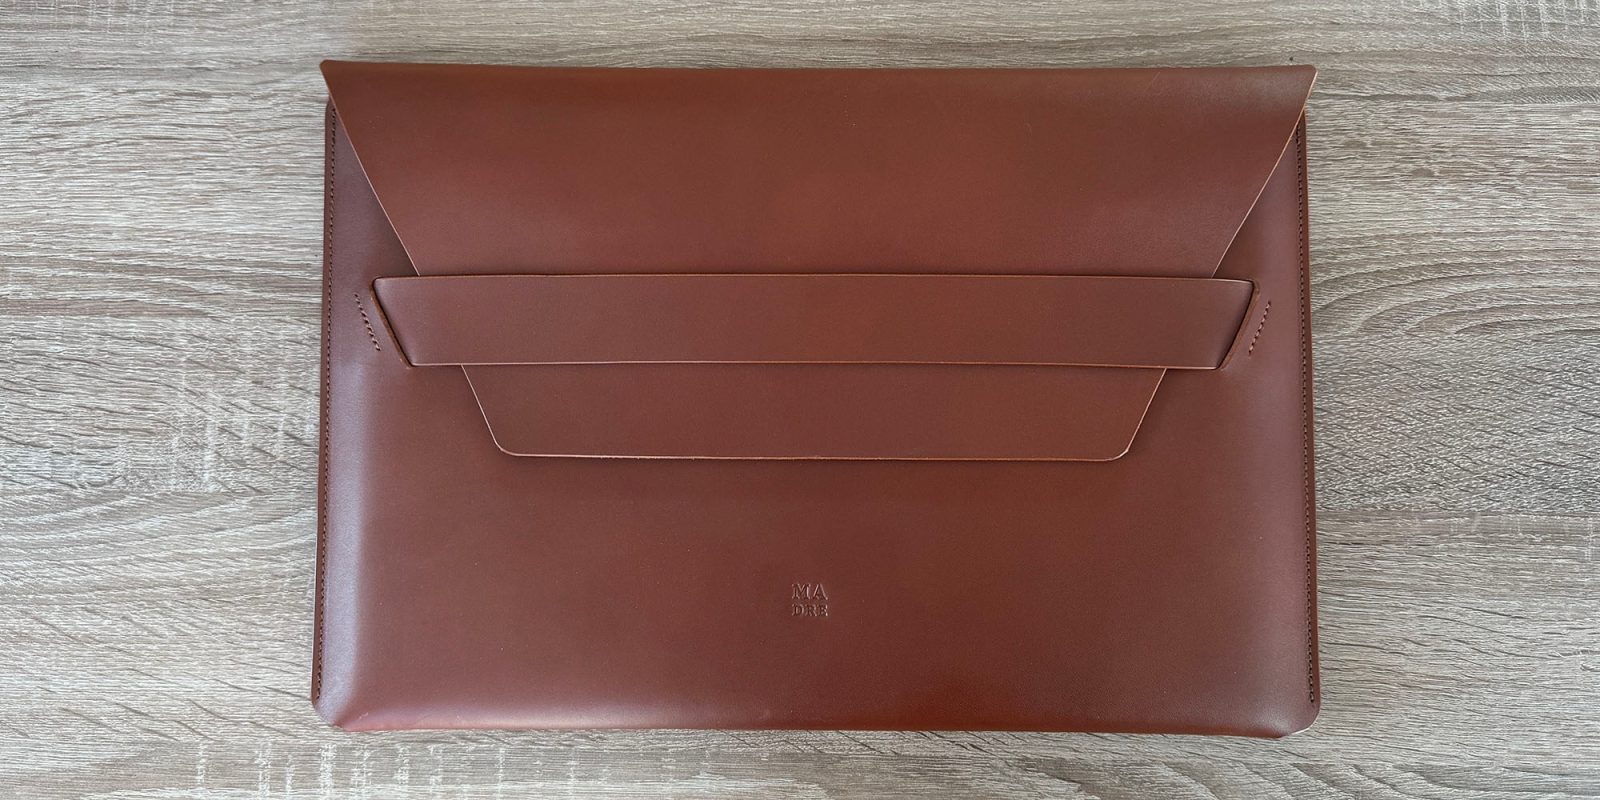 Manuel-Dreesmann hand-made leather MacBook Pro case